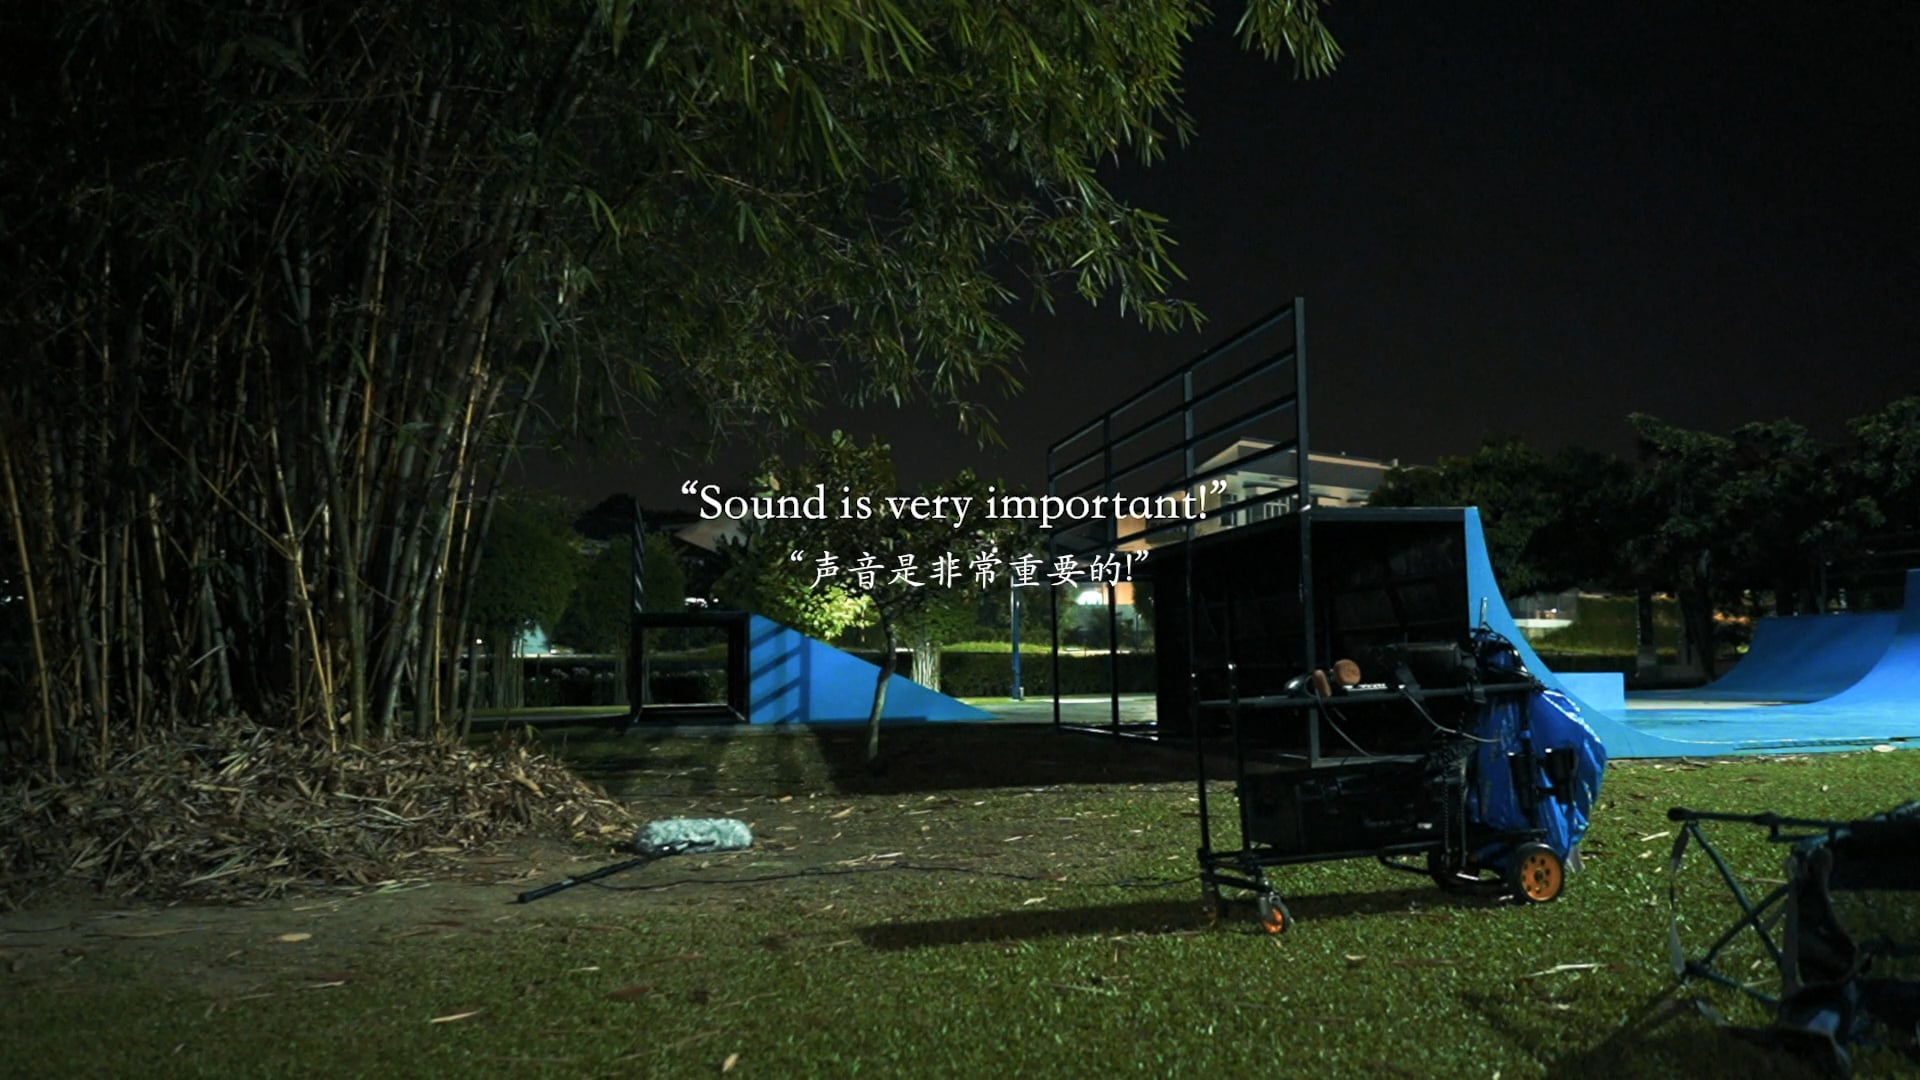 Cricket Sounds Trailer